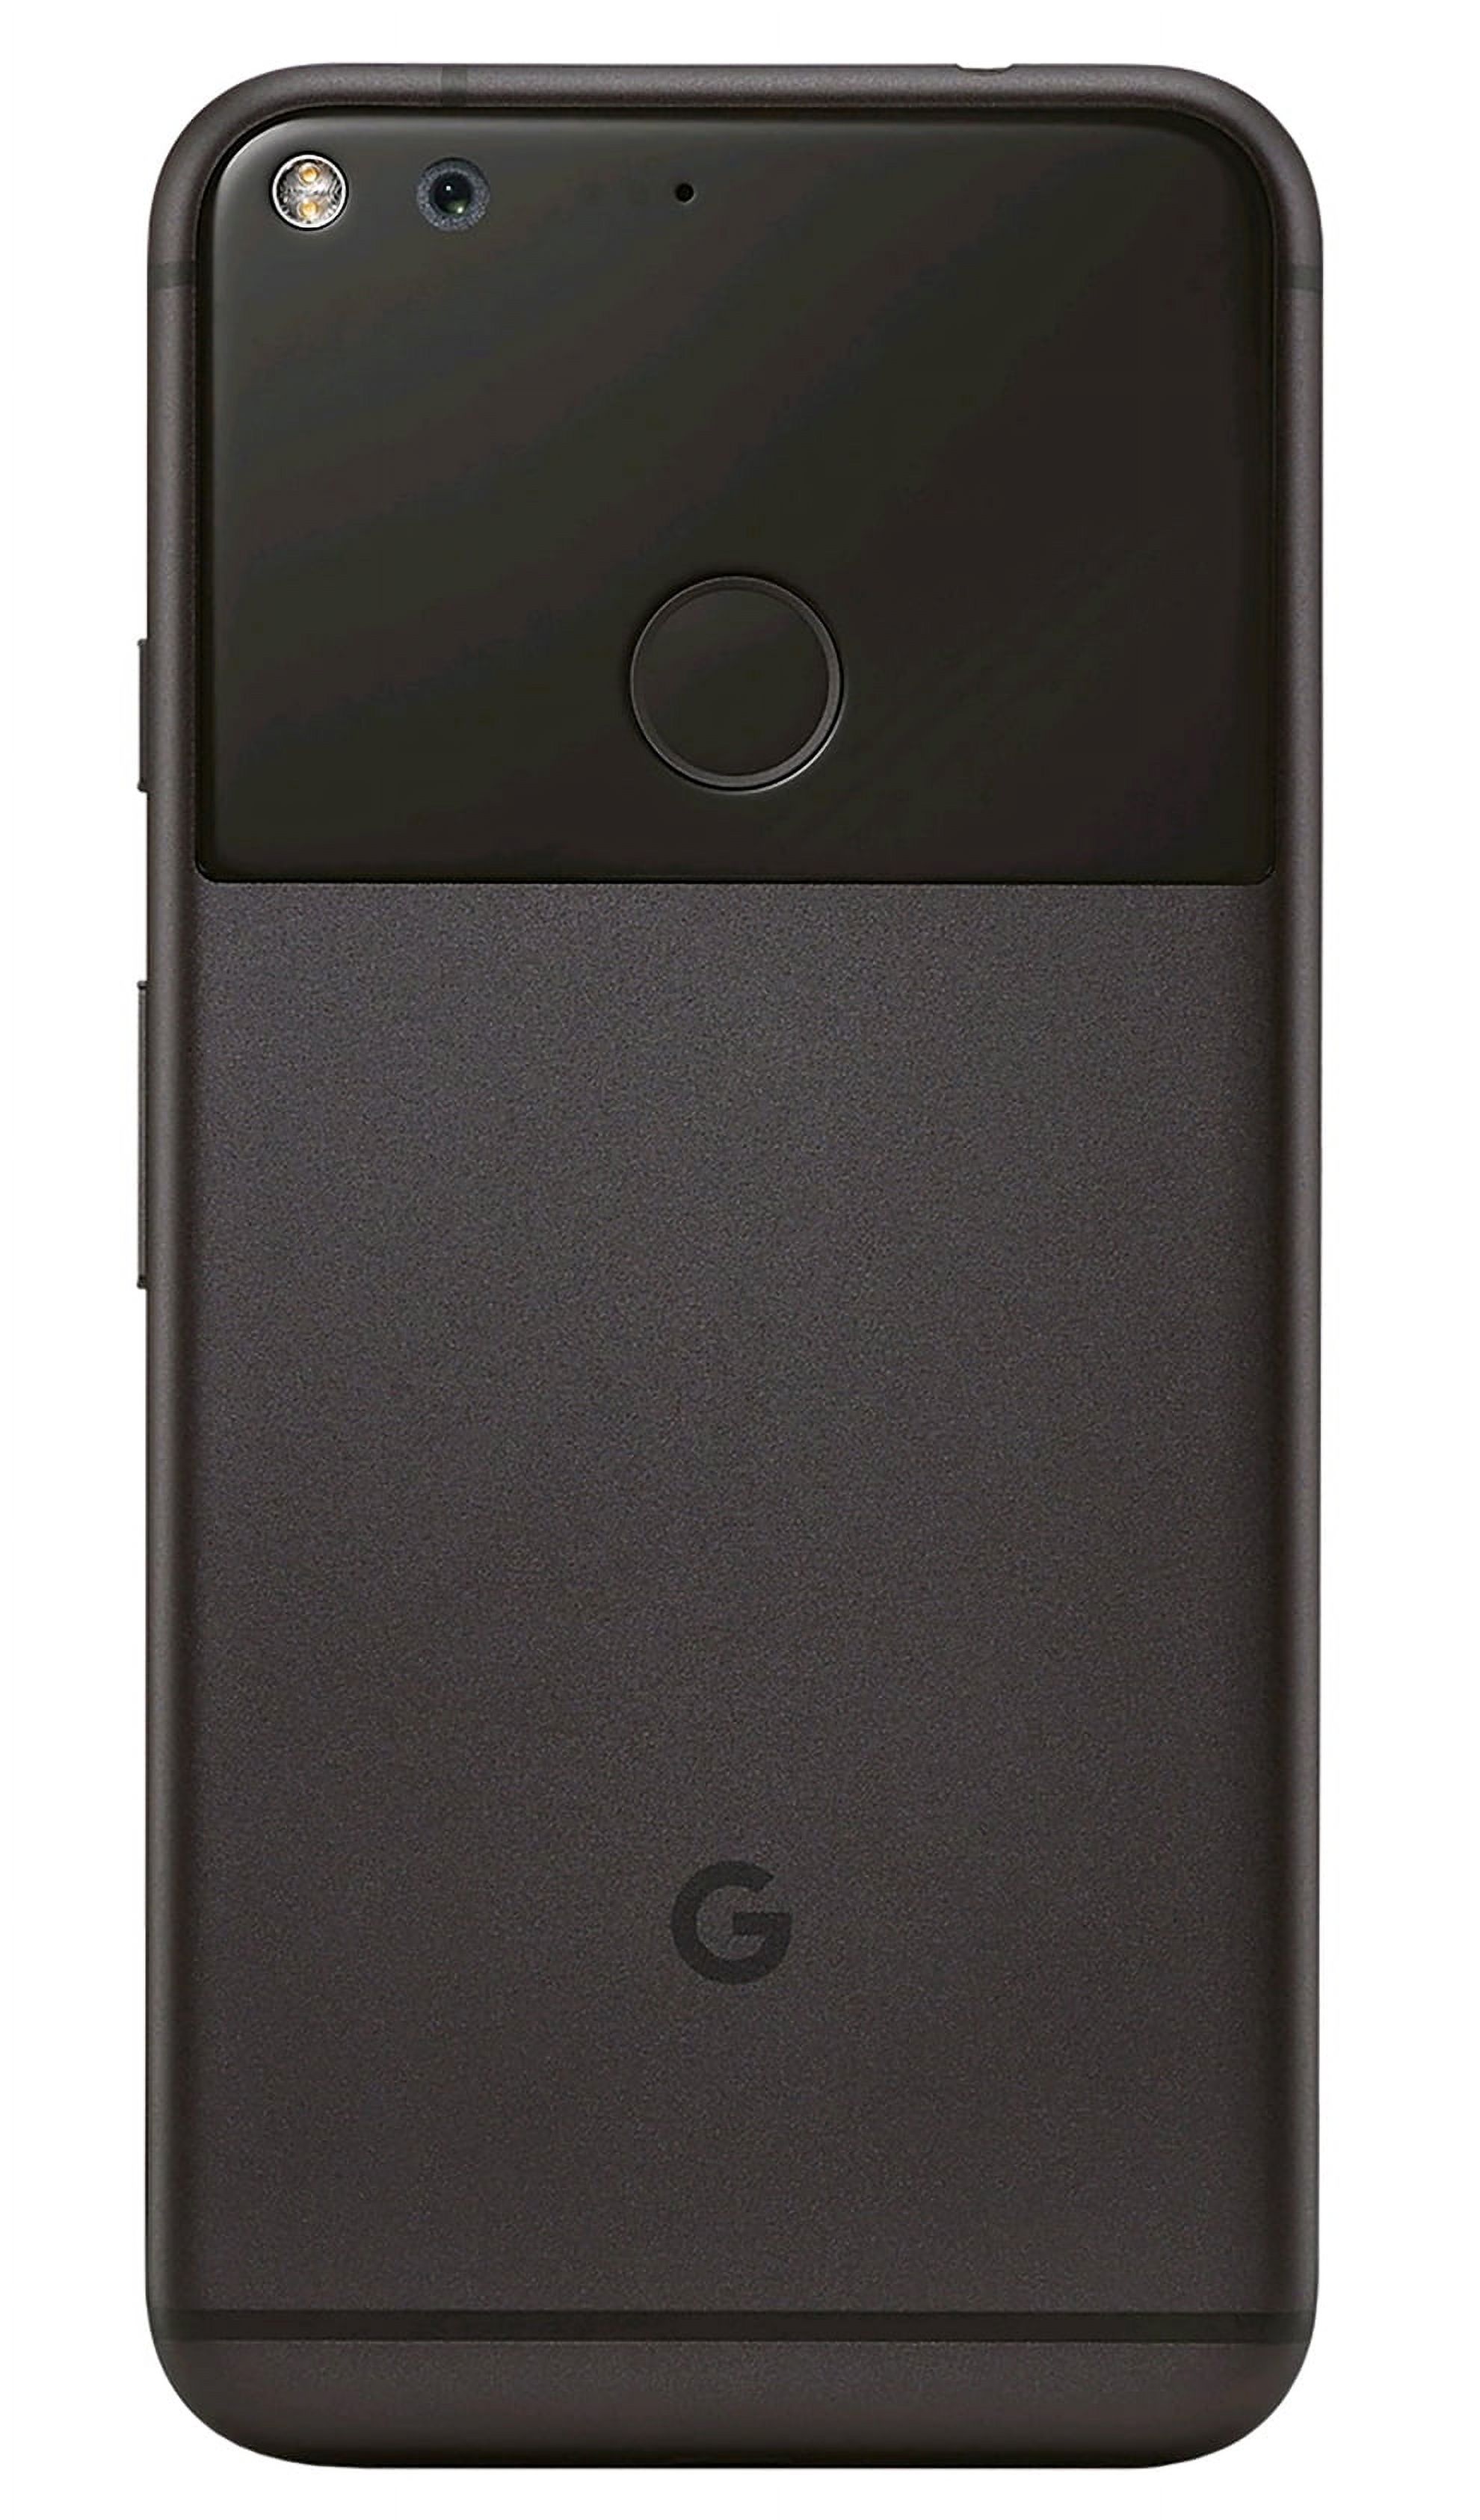 Google Pixel Phone 128 GB - 5 inch Display (Factory Unlocked US Version) (Quite Black) - image 2 of 6